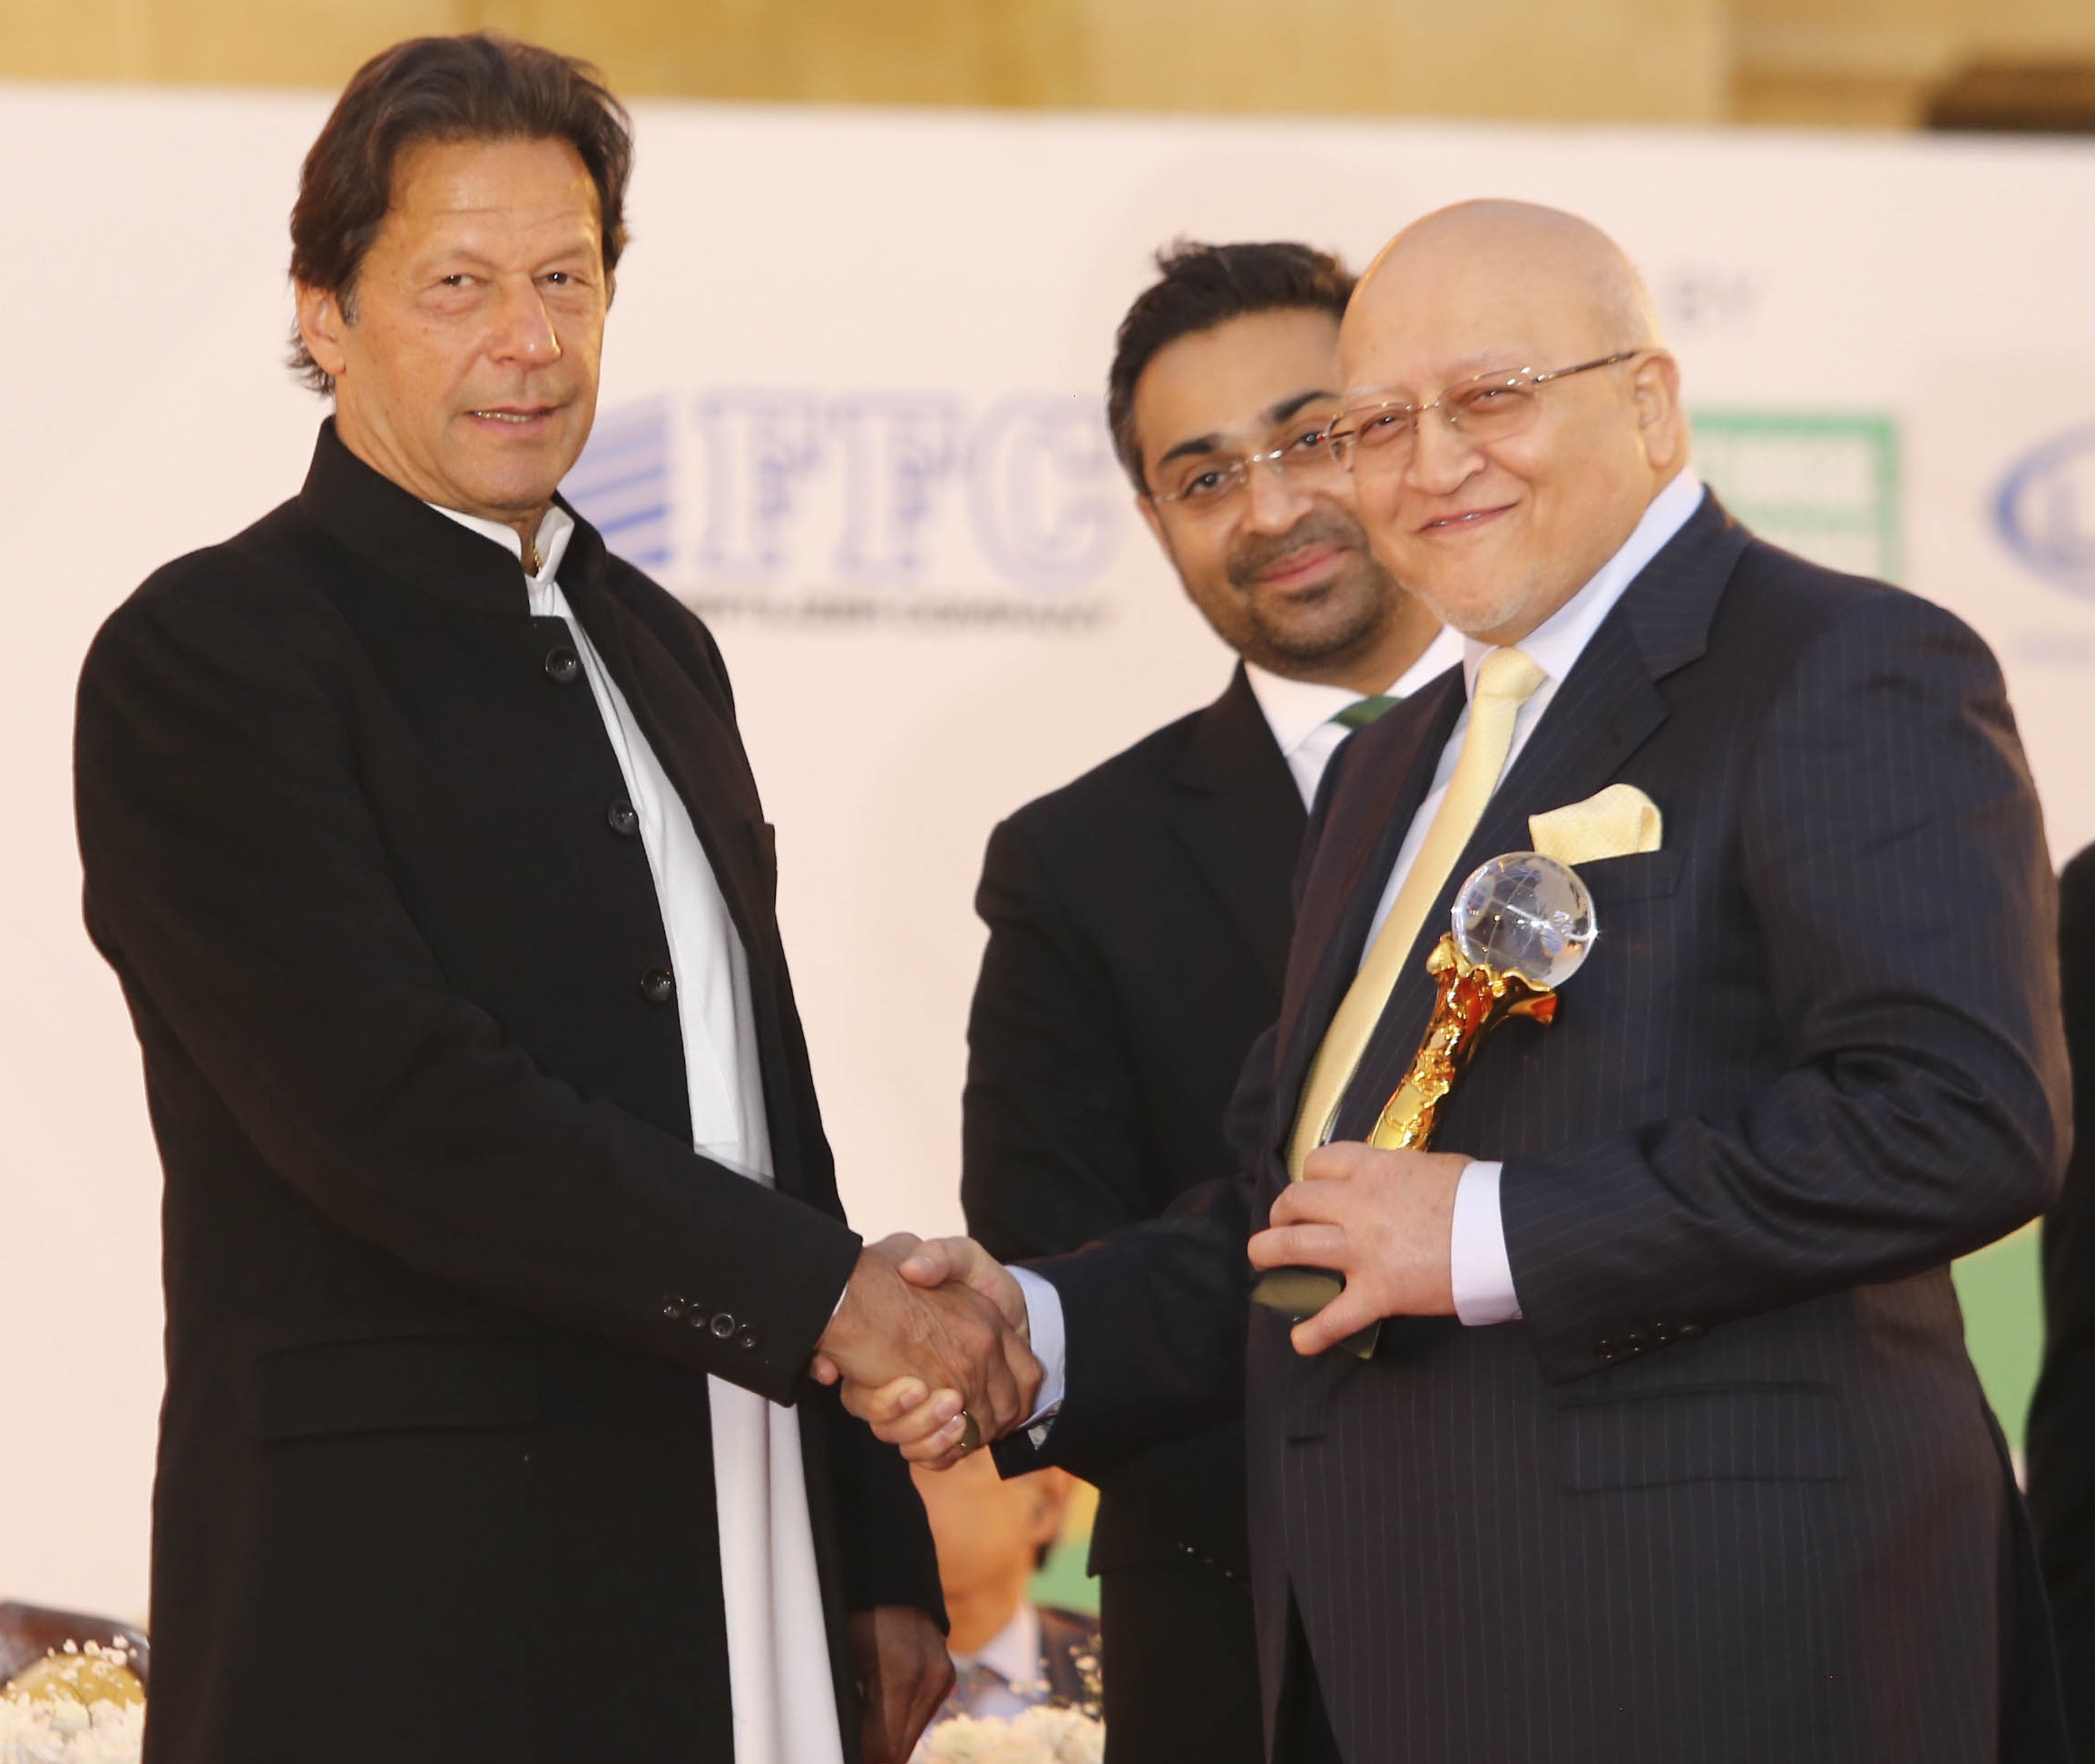 Imran Khan’s Award and Achievements